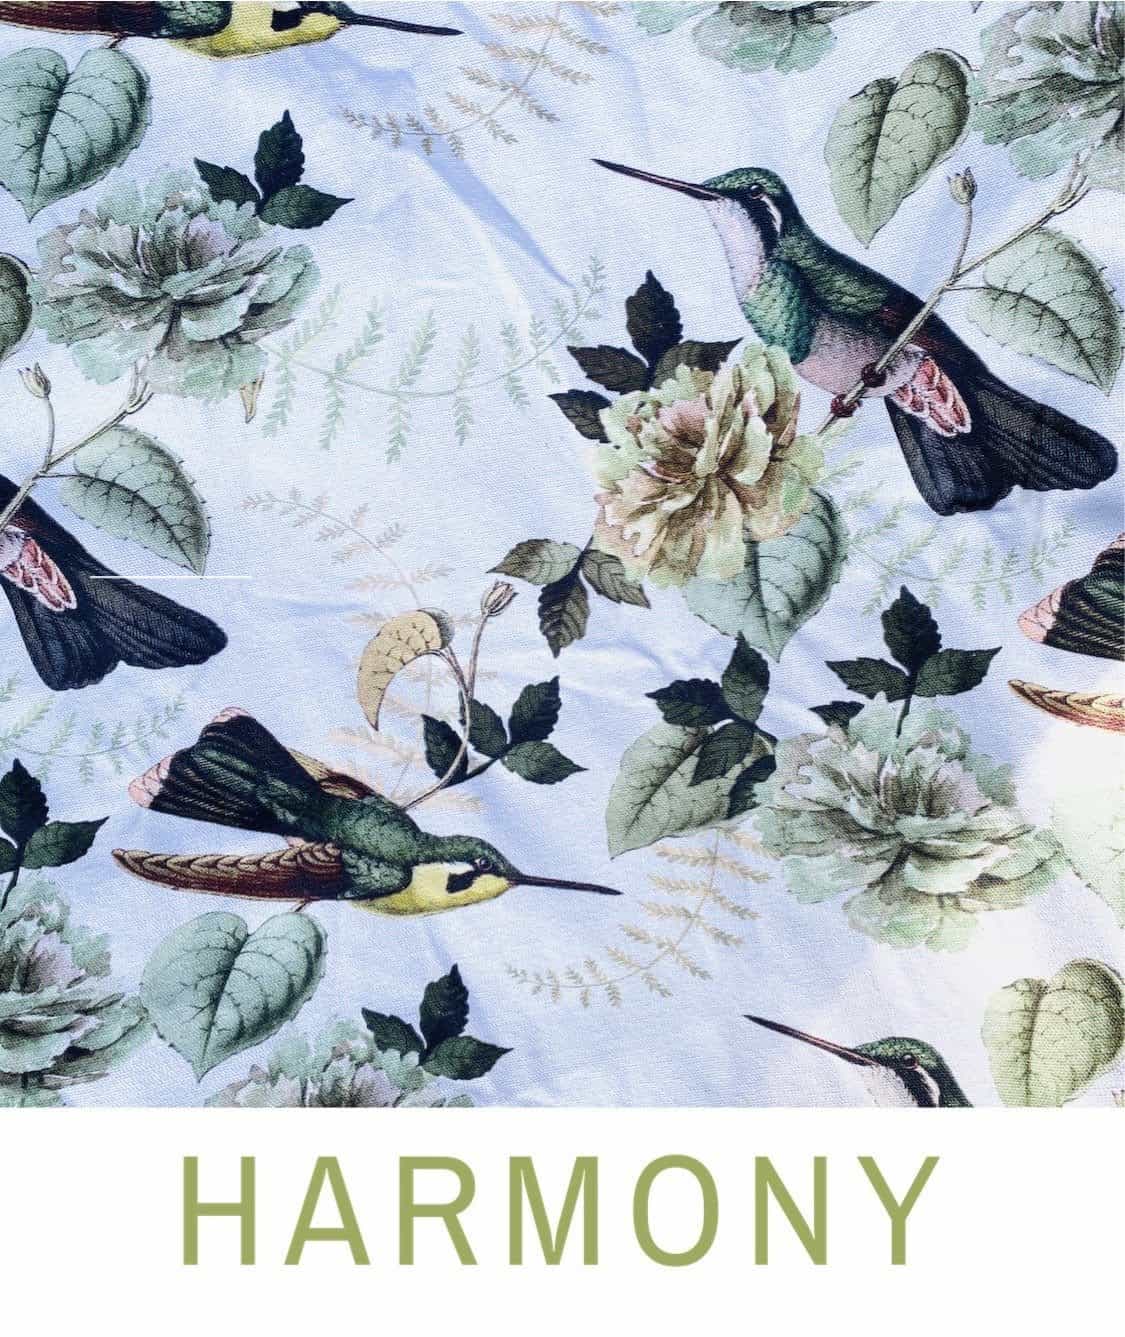 Yoga Bolster - Harmony